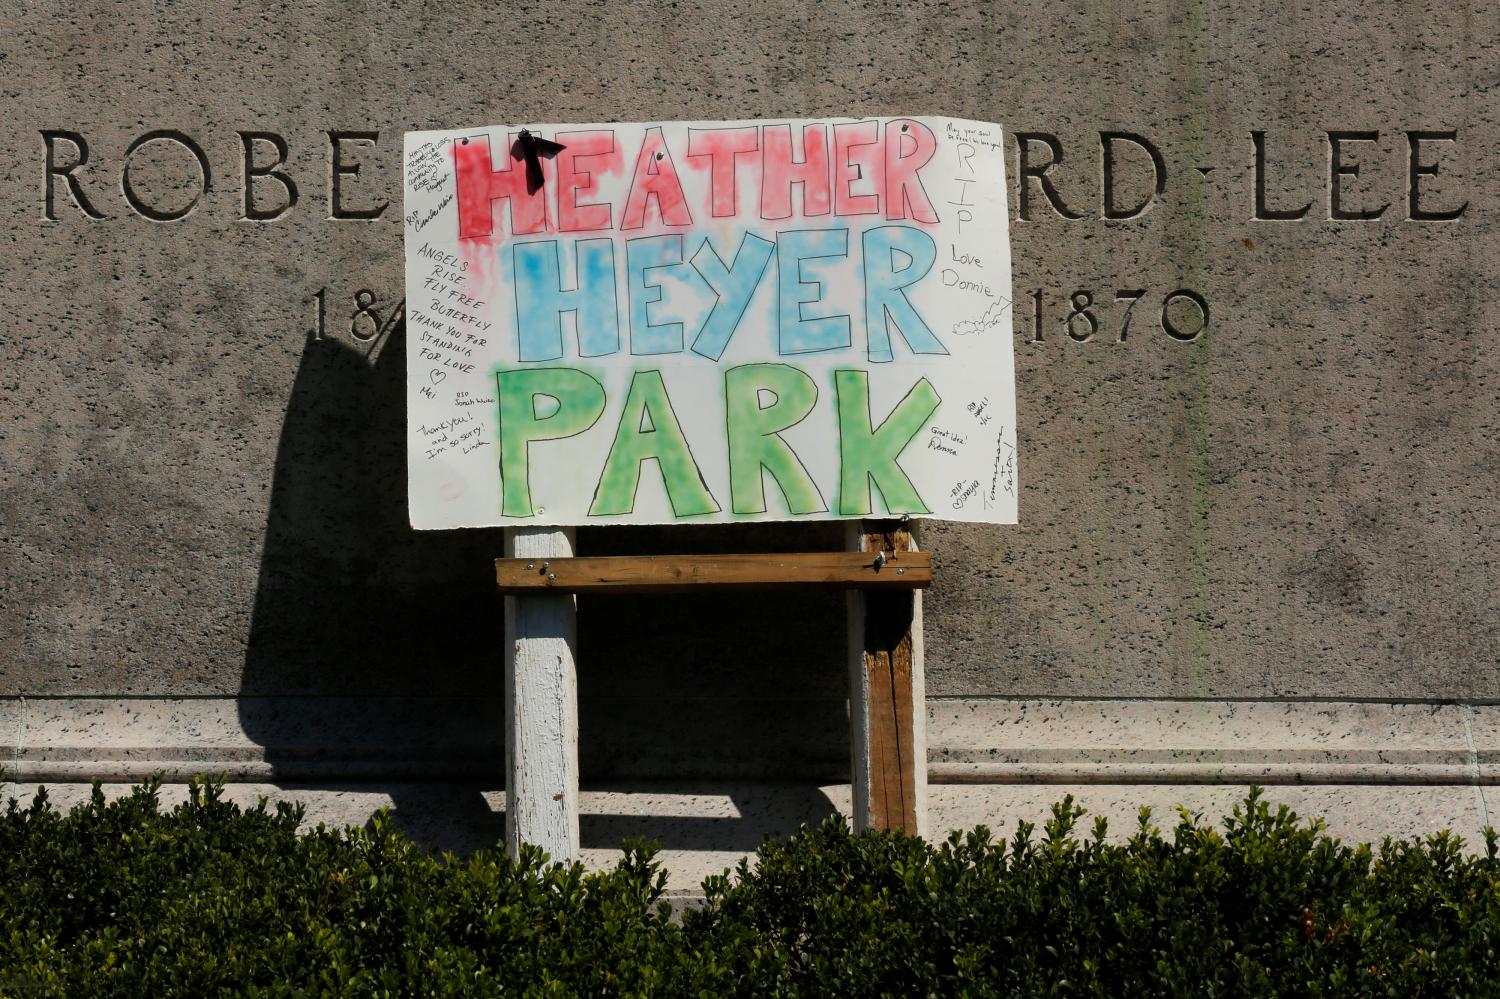 A sign honoring Heather Heyer in Charlottesville, VA